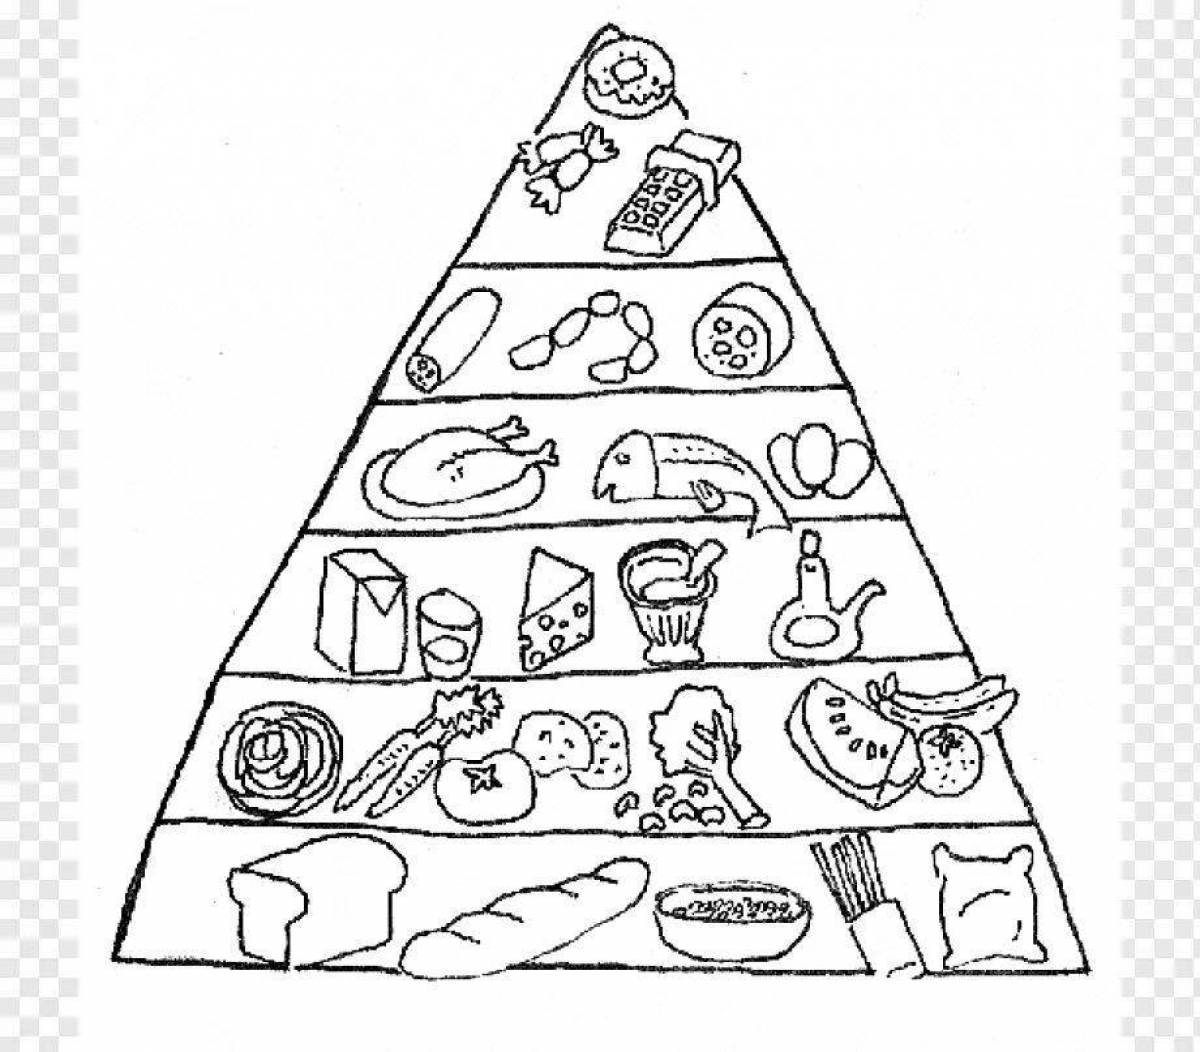 Food pyramid #17